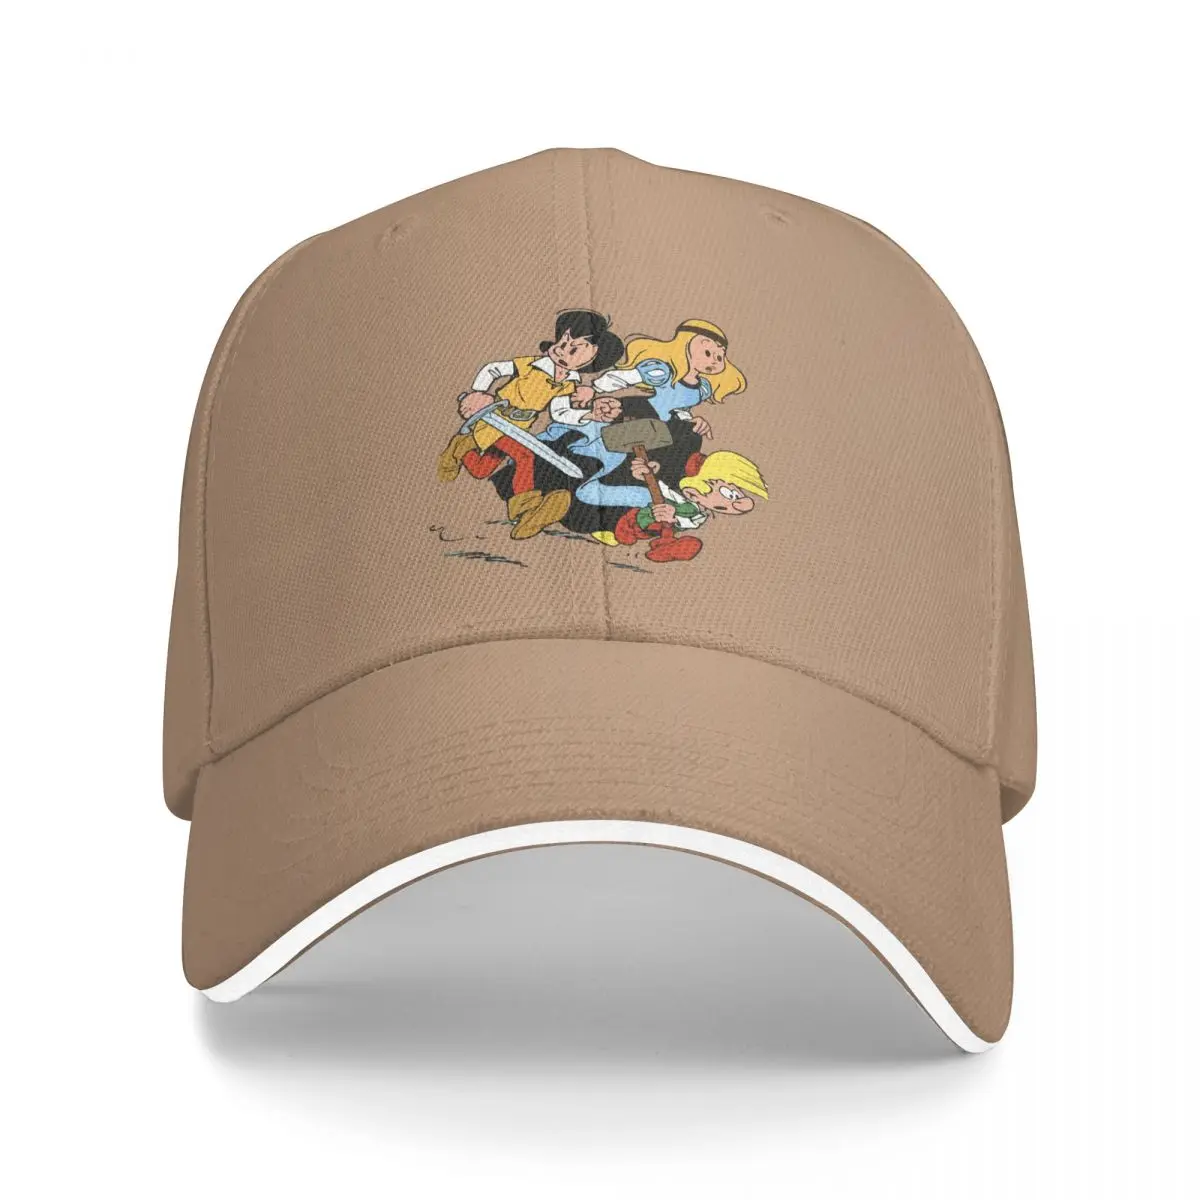 

Gaston Lagaffe Anime Princess Dad Hats Pure Color Women's Hat Sunprotection Baseball Caps Peaked Cap